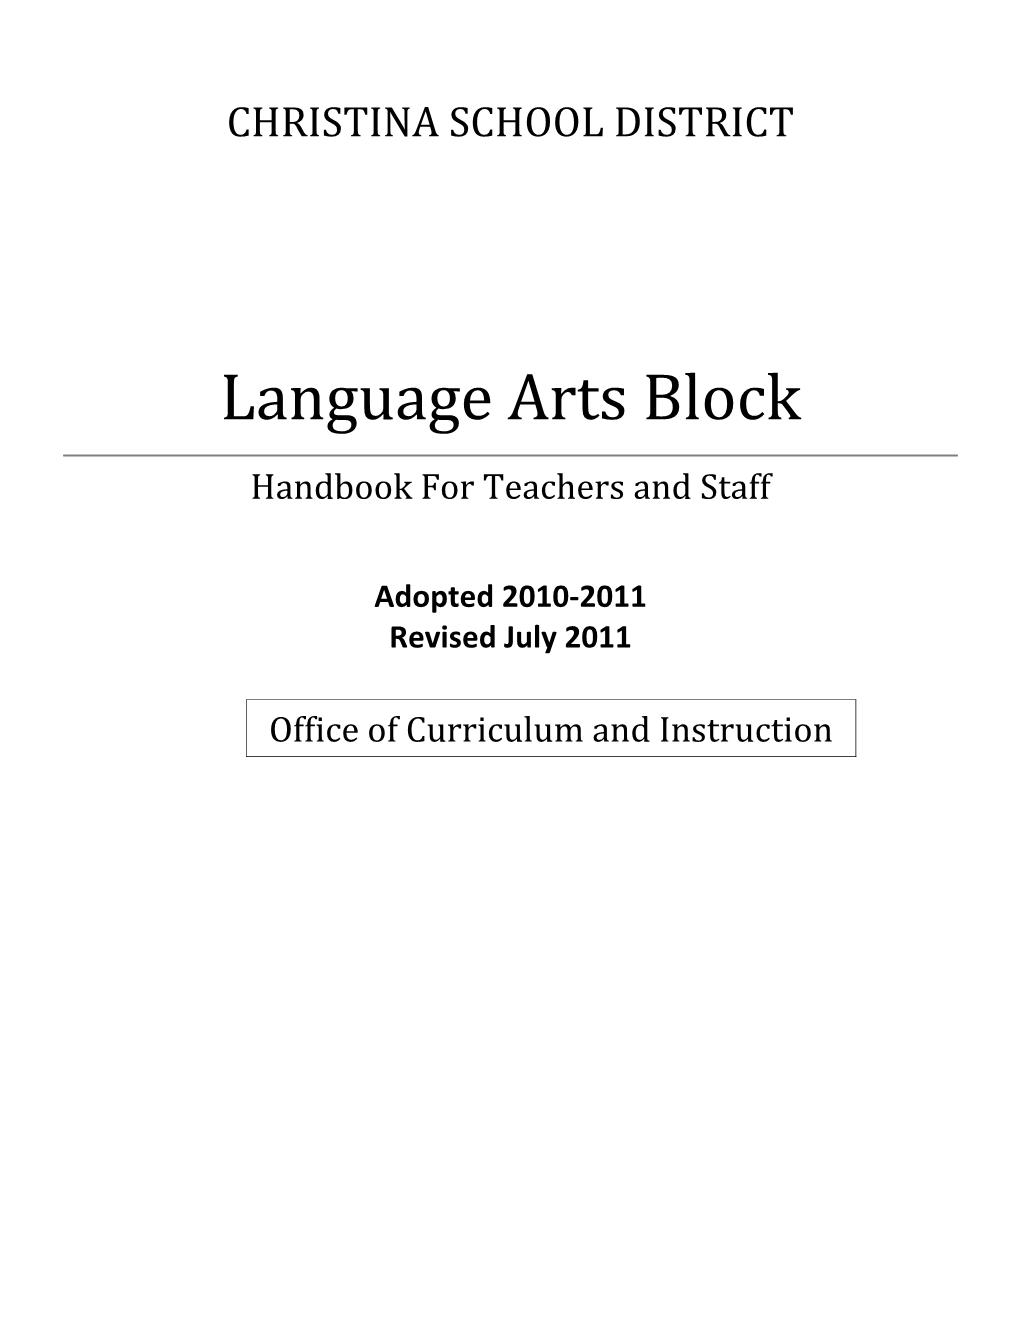 Language Arts Block